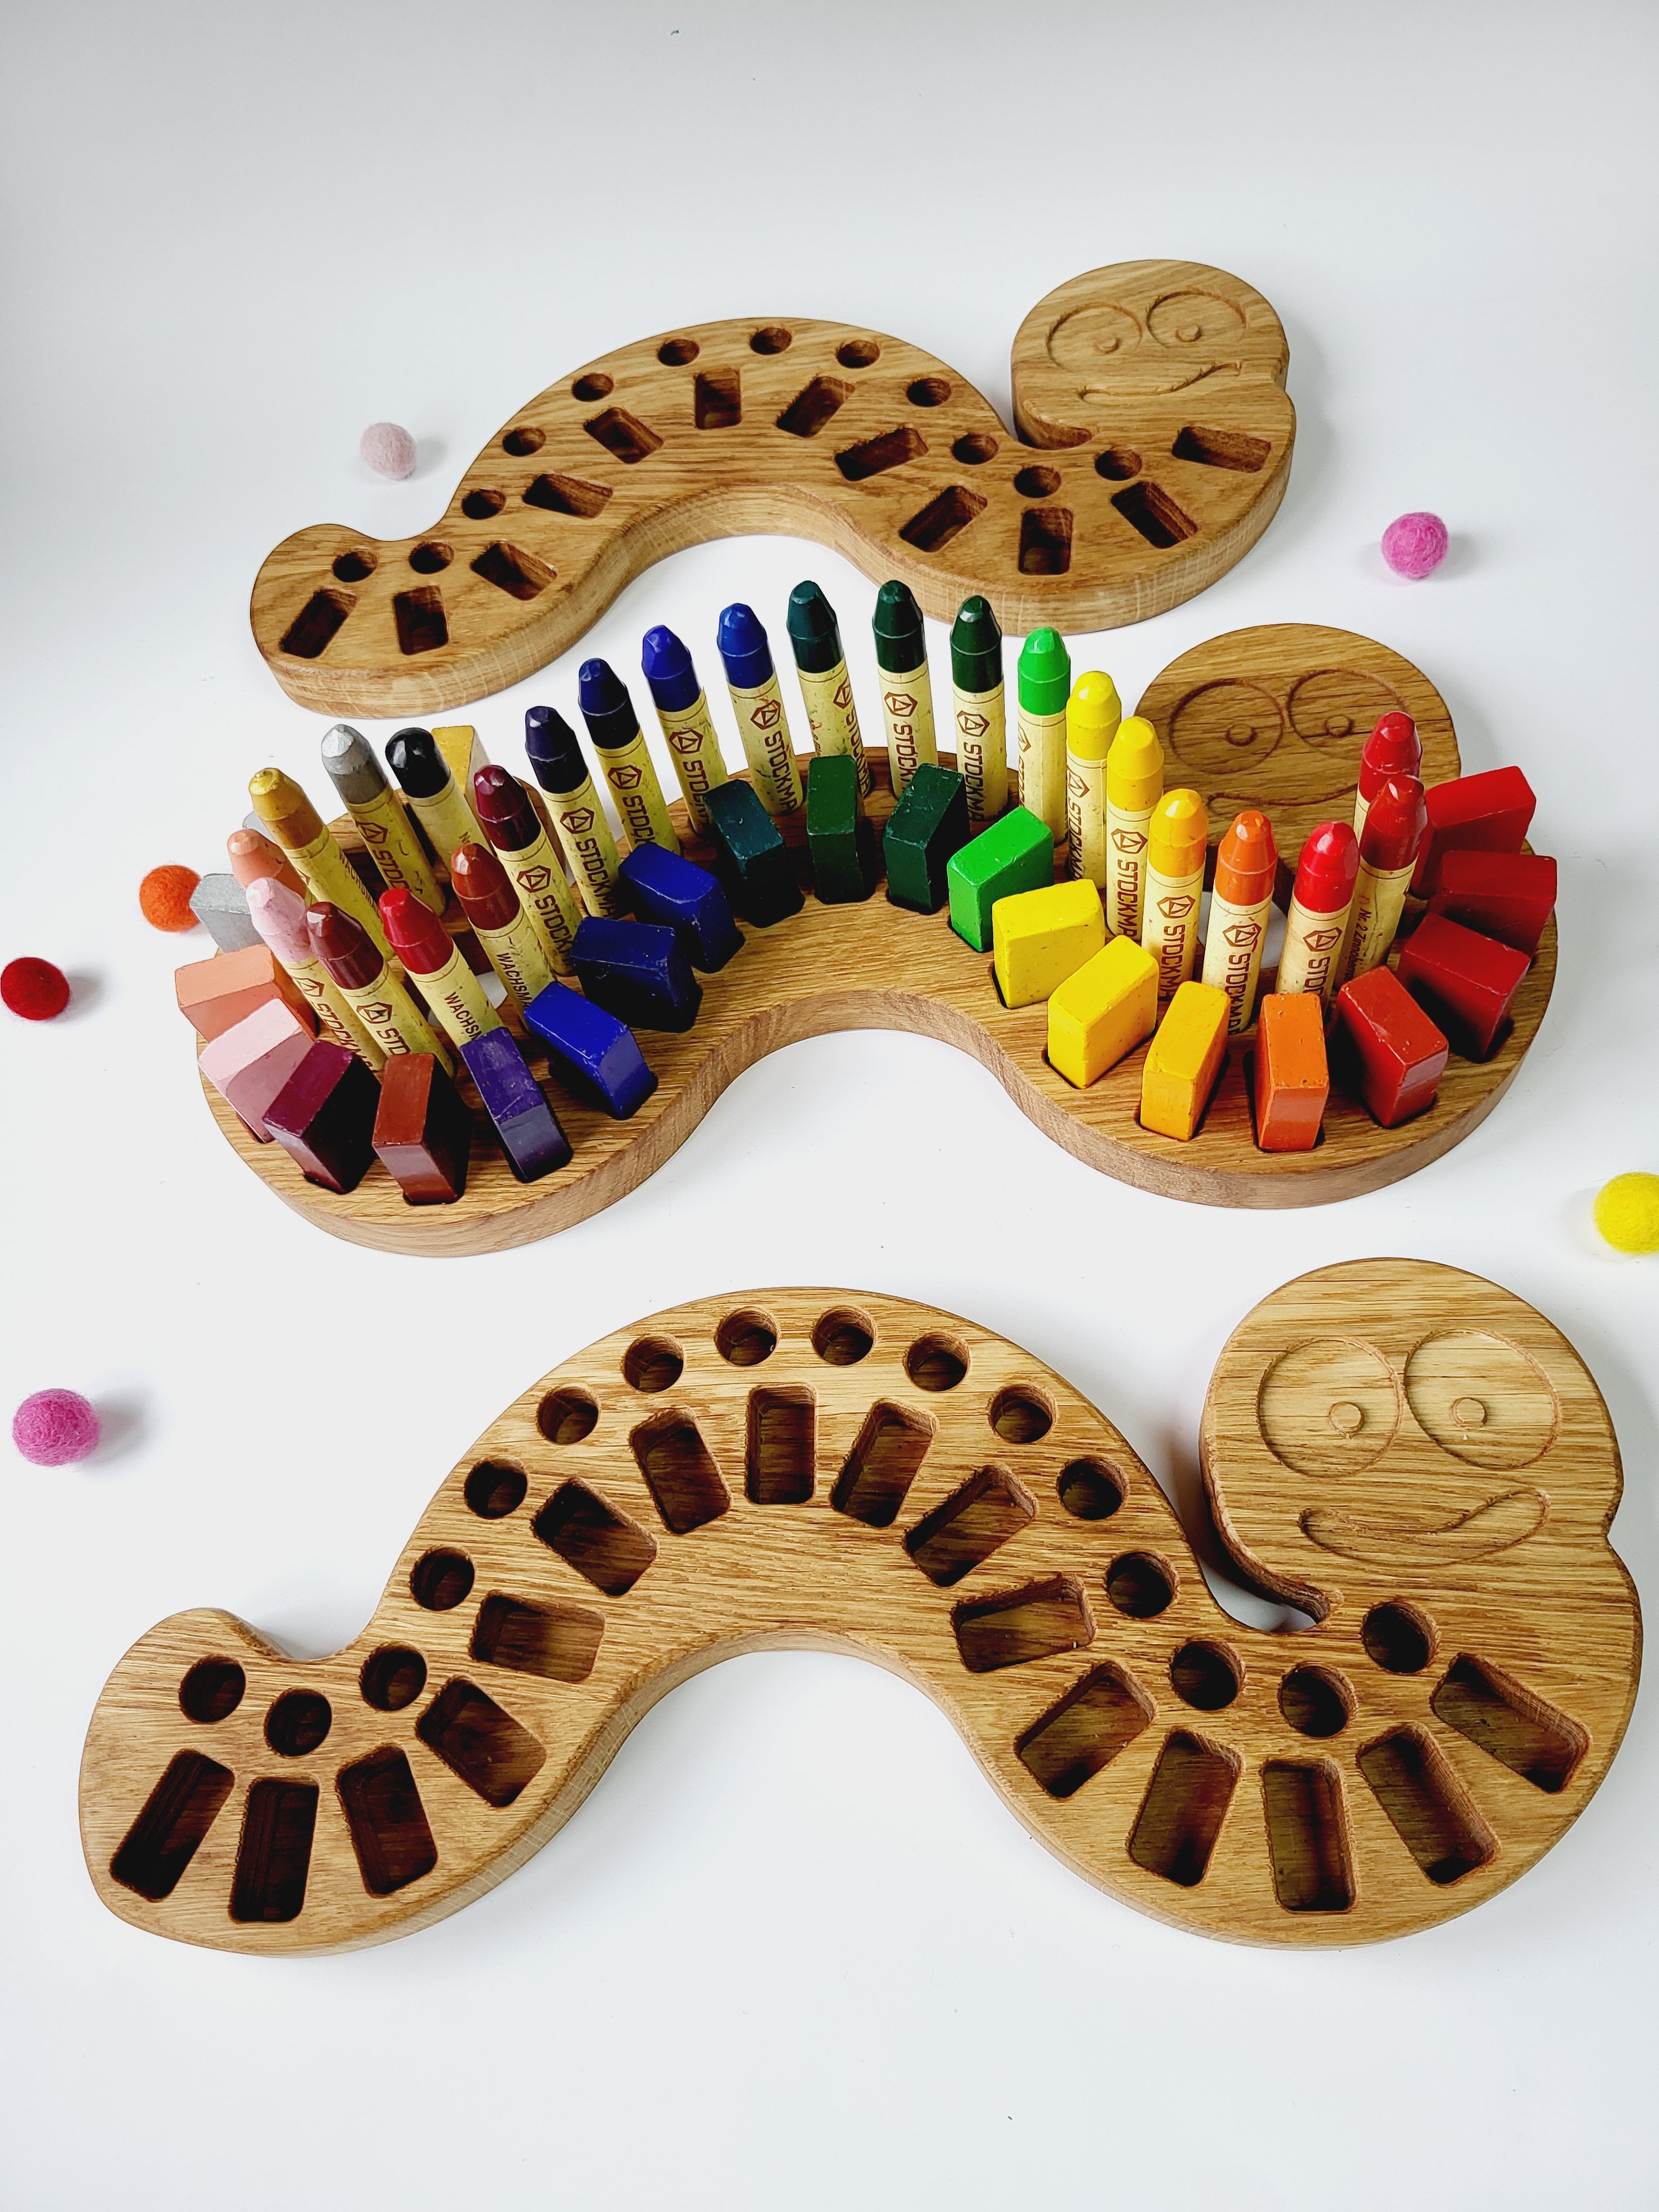 Stockmar Crayon Holder  24 blocks and 24 sticks Caterpillar shape Art supplies gift for kids desk organization wooden holder without crayons